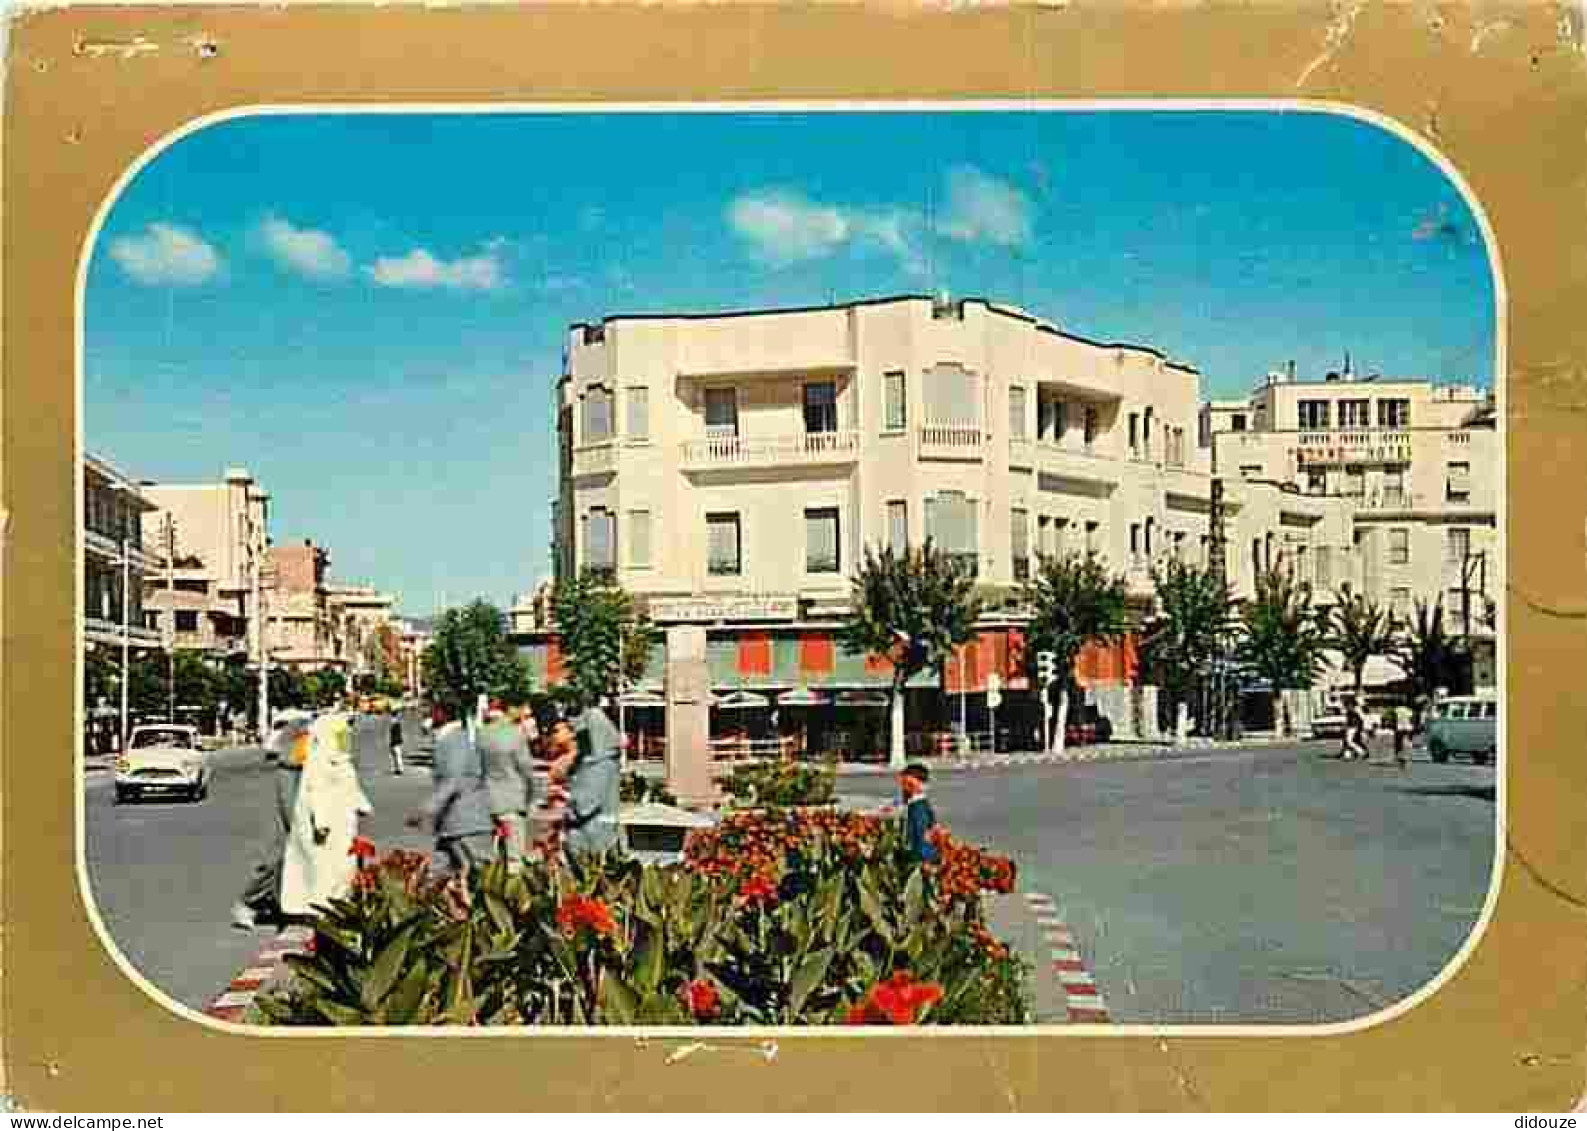 Maroc - Fes - Place Mohammed V - CPM - Voir Scans Recto-Verso - Fez